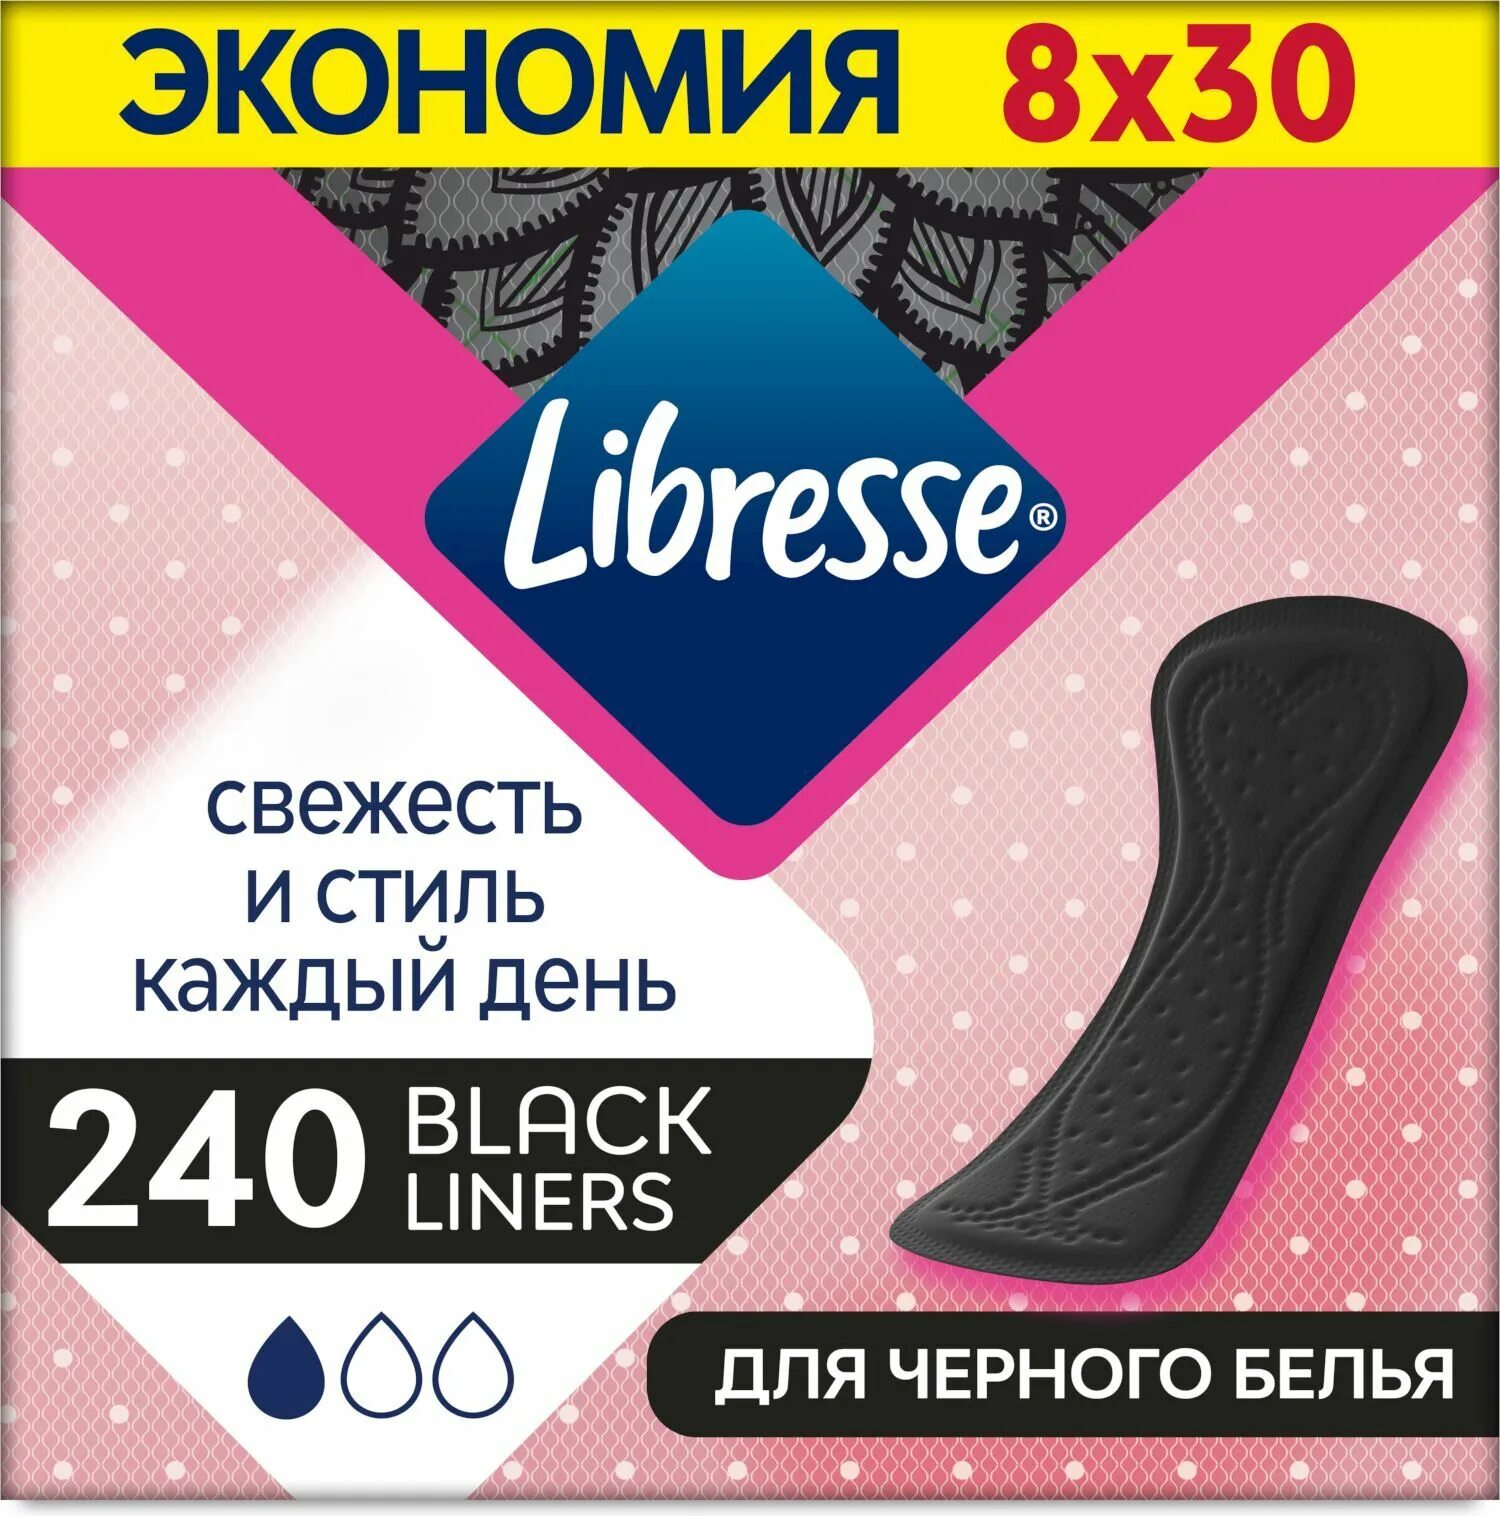 Прокладки Libresse Dailyfresh normal Black ежедневные 30шт. Libresse ежедневные прокладки нормал Black 30. Ежедневные прокладки Libresse Black 30шт. Libresse Black Liners прокладки ежедневные n30.